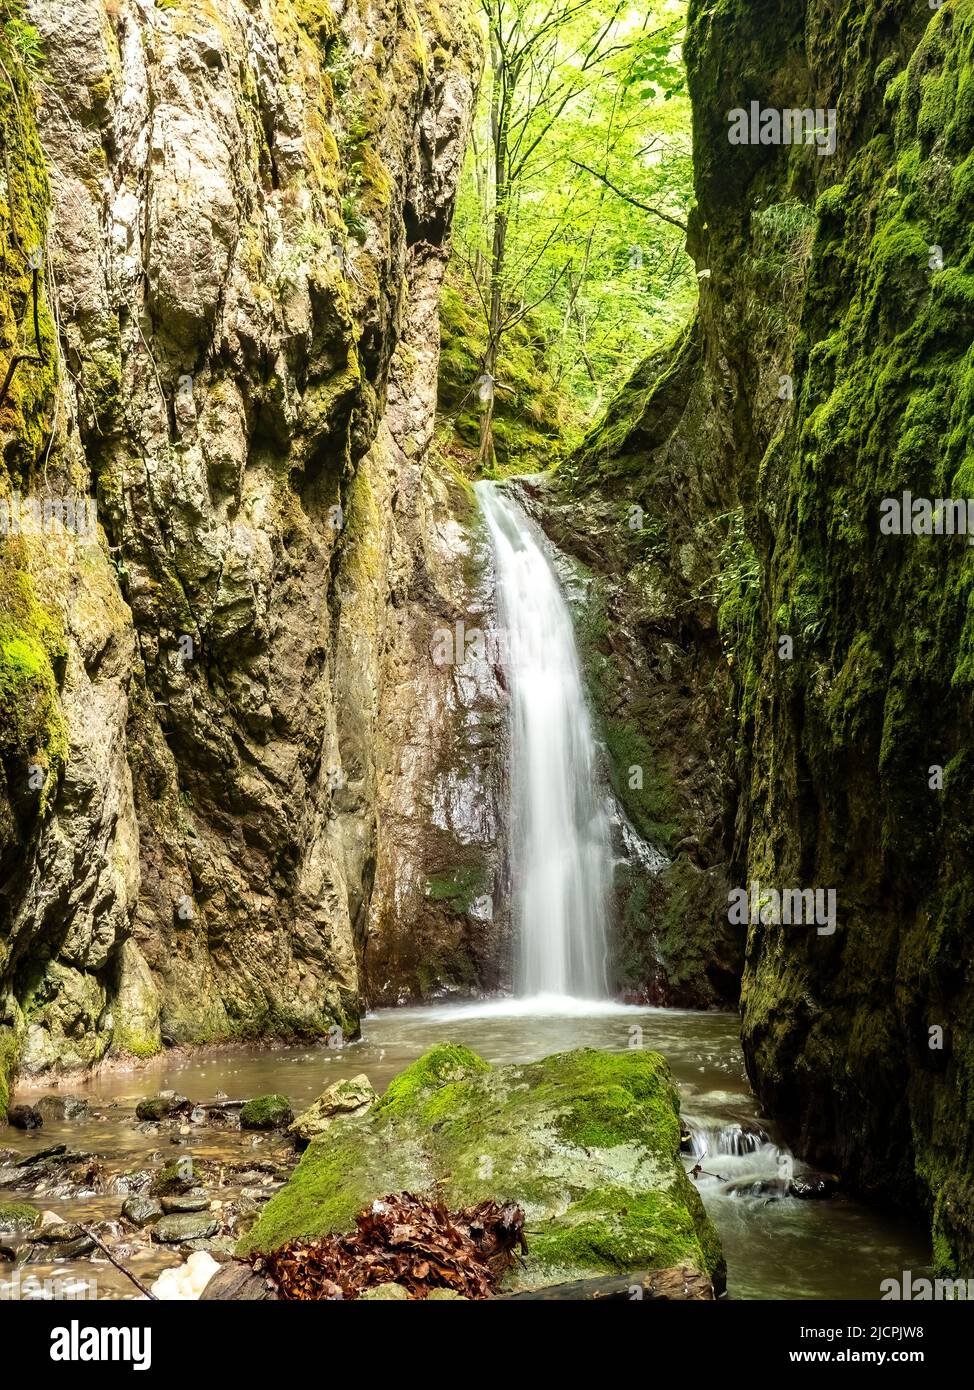 cascada bedina en el bosque, valle de cerna, rumania Foto de stock